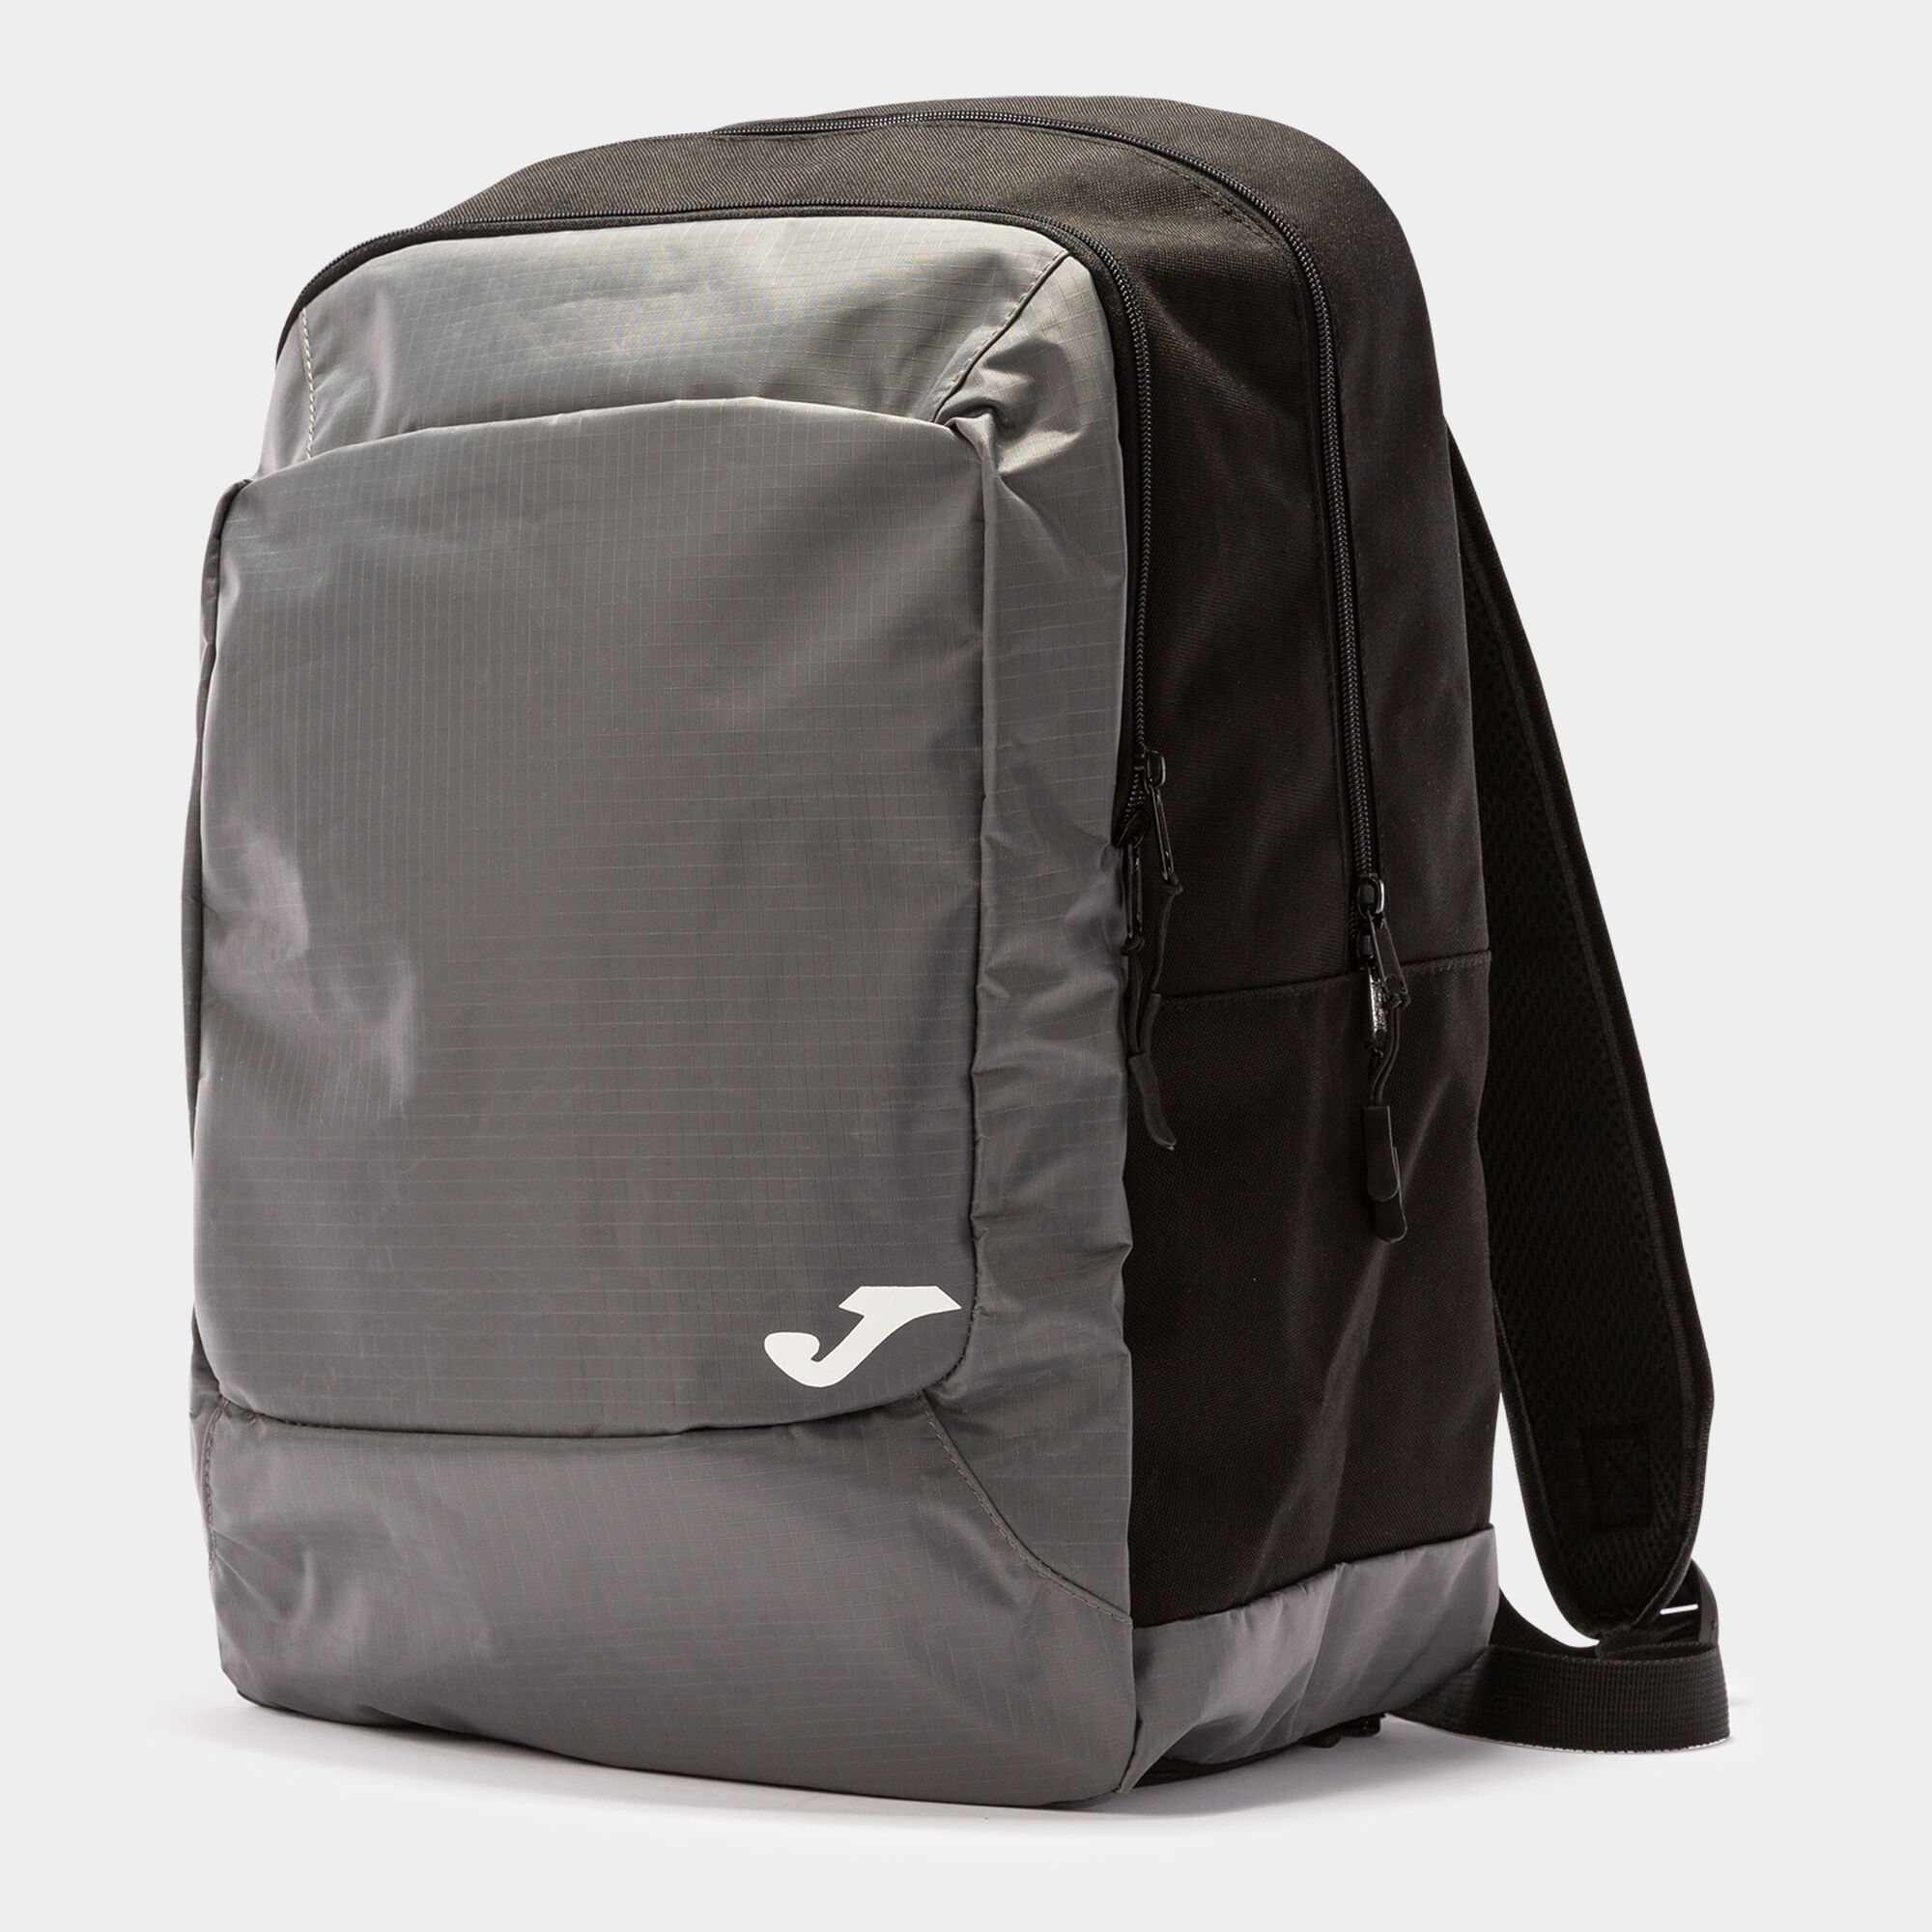 Backpack - shoe bag Team black dark gray